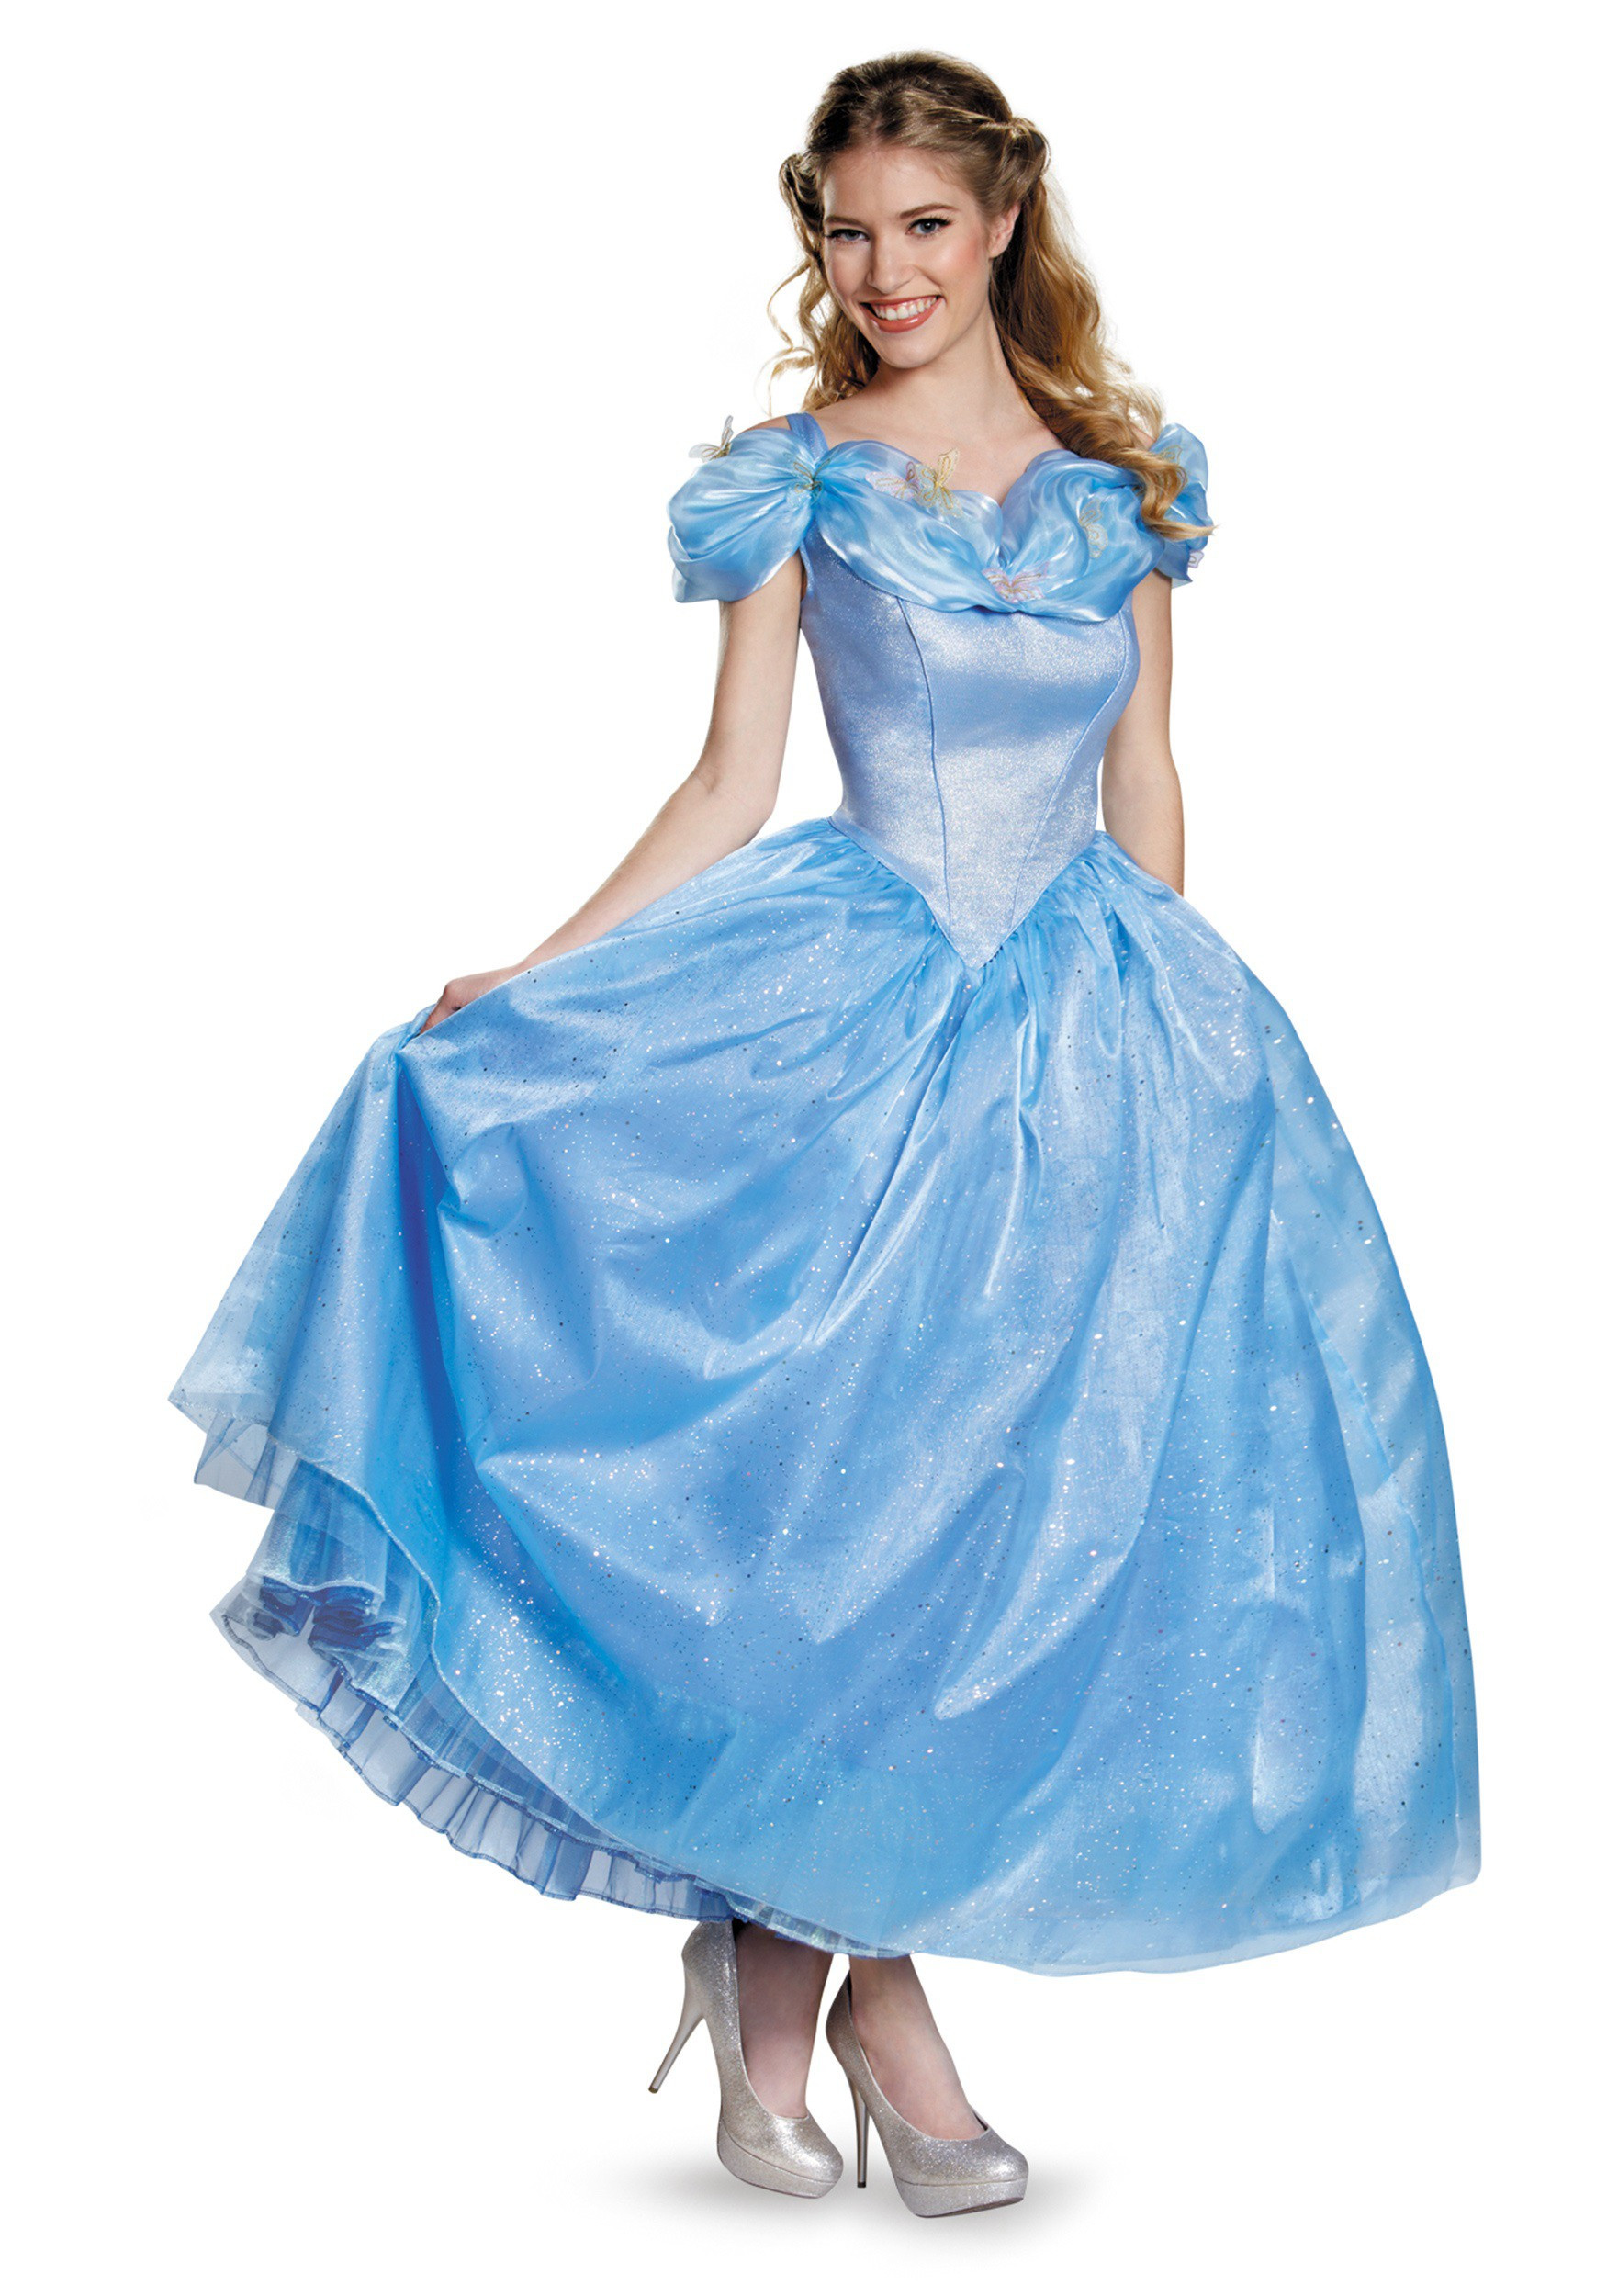 Best ideas about Cinderella DIY Costumes
. Save or Pin Women s Cinderella Movie Prestige Costume Now.